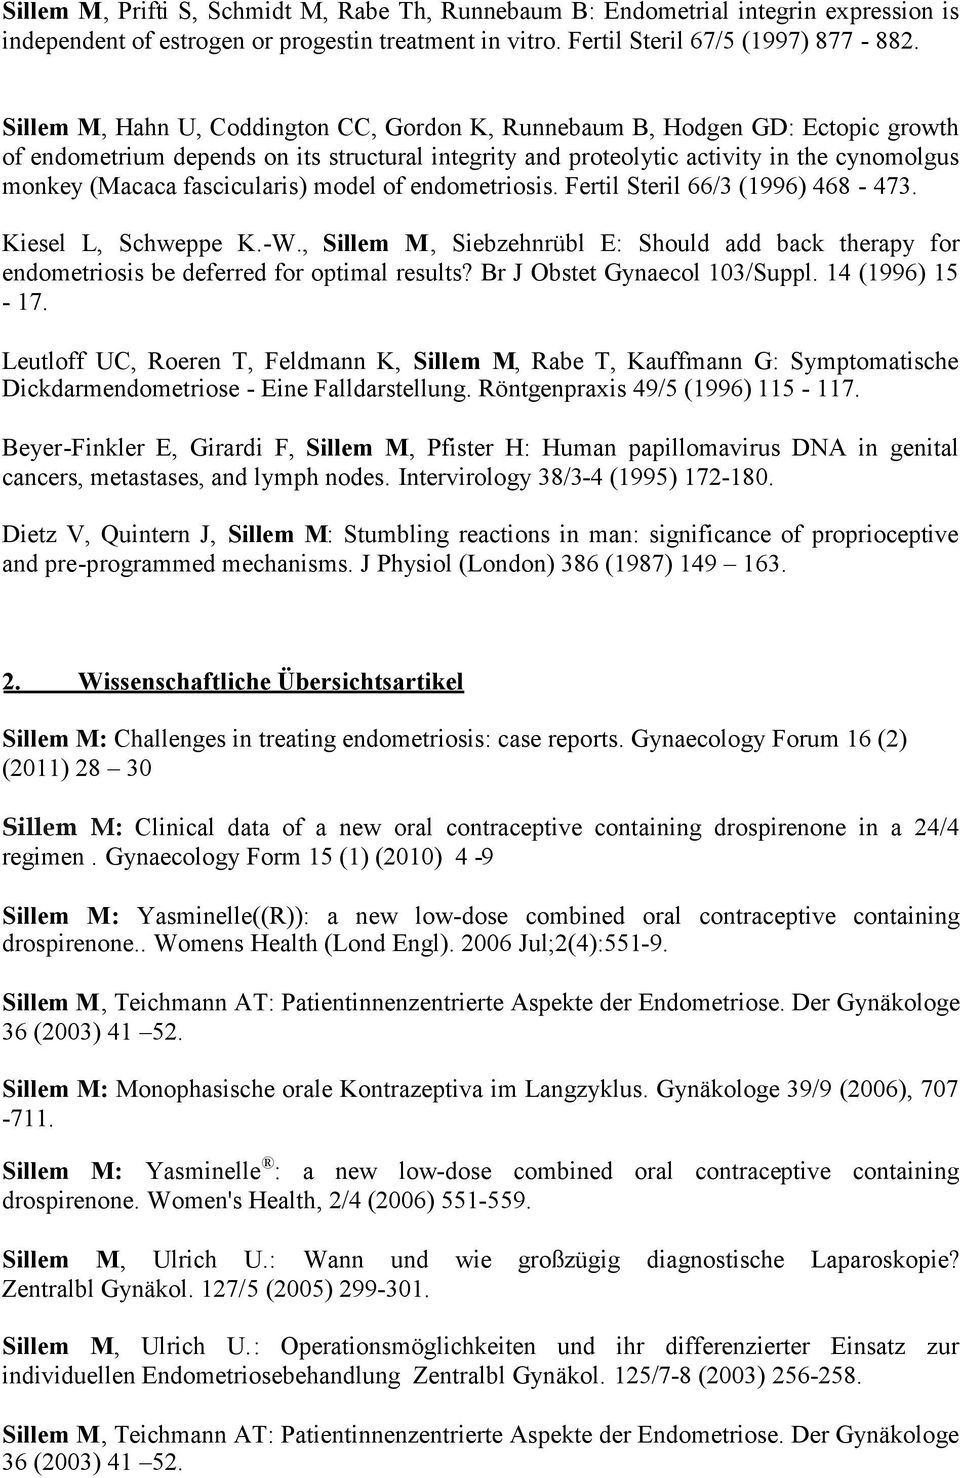 fascicularis) model of endometriosis. Fertil Steril 66/3 (1996) 468-473. Kiesel L, Schweppe K.-W., Sillem M, Siebzehnrübl E: Should add back therapy for endometriosis be deferred for optimal results?